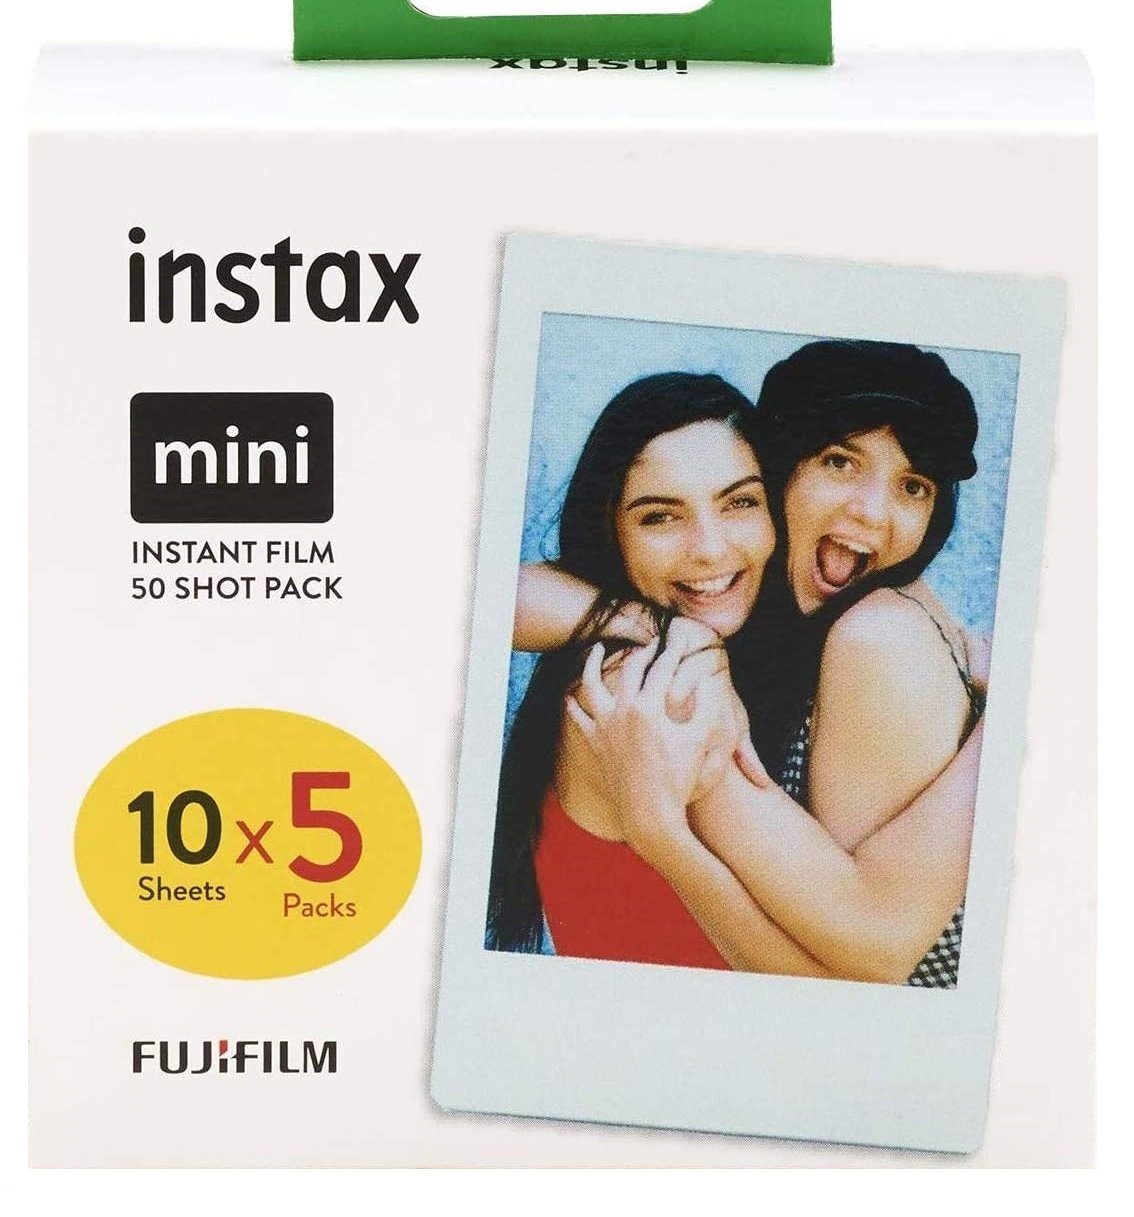 dawecom-24 Fujifilm Instax Mini Instant Film Pack, 5 x 10 = 50 Bilder Fotos für Sofortbildkamera